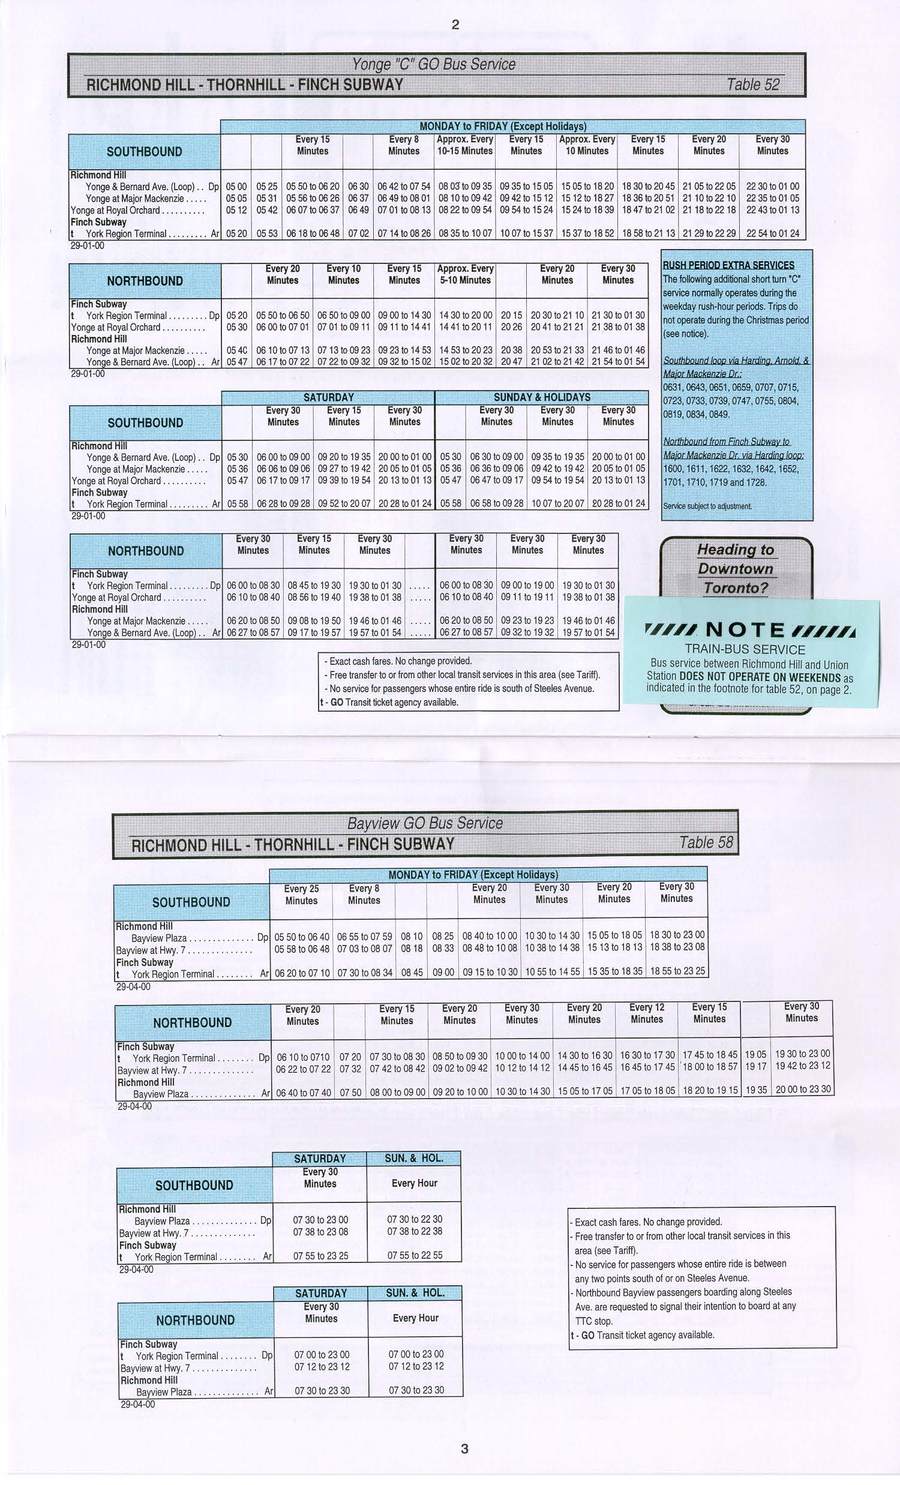 GO transit timetable circa 2000 page 4